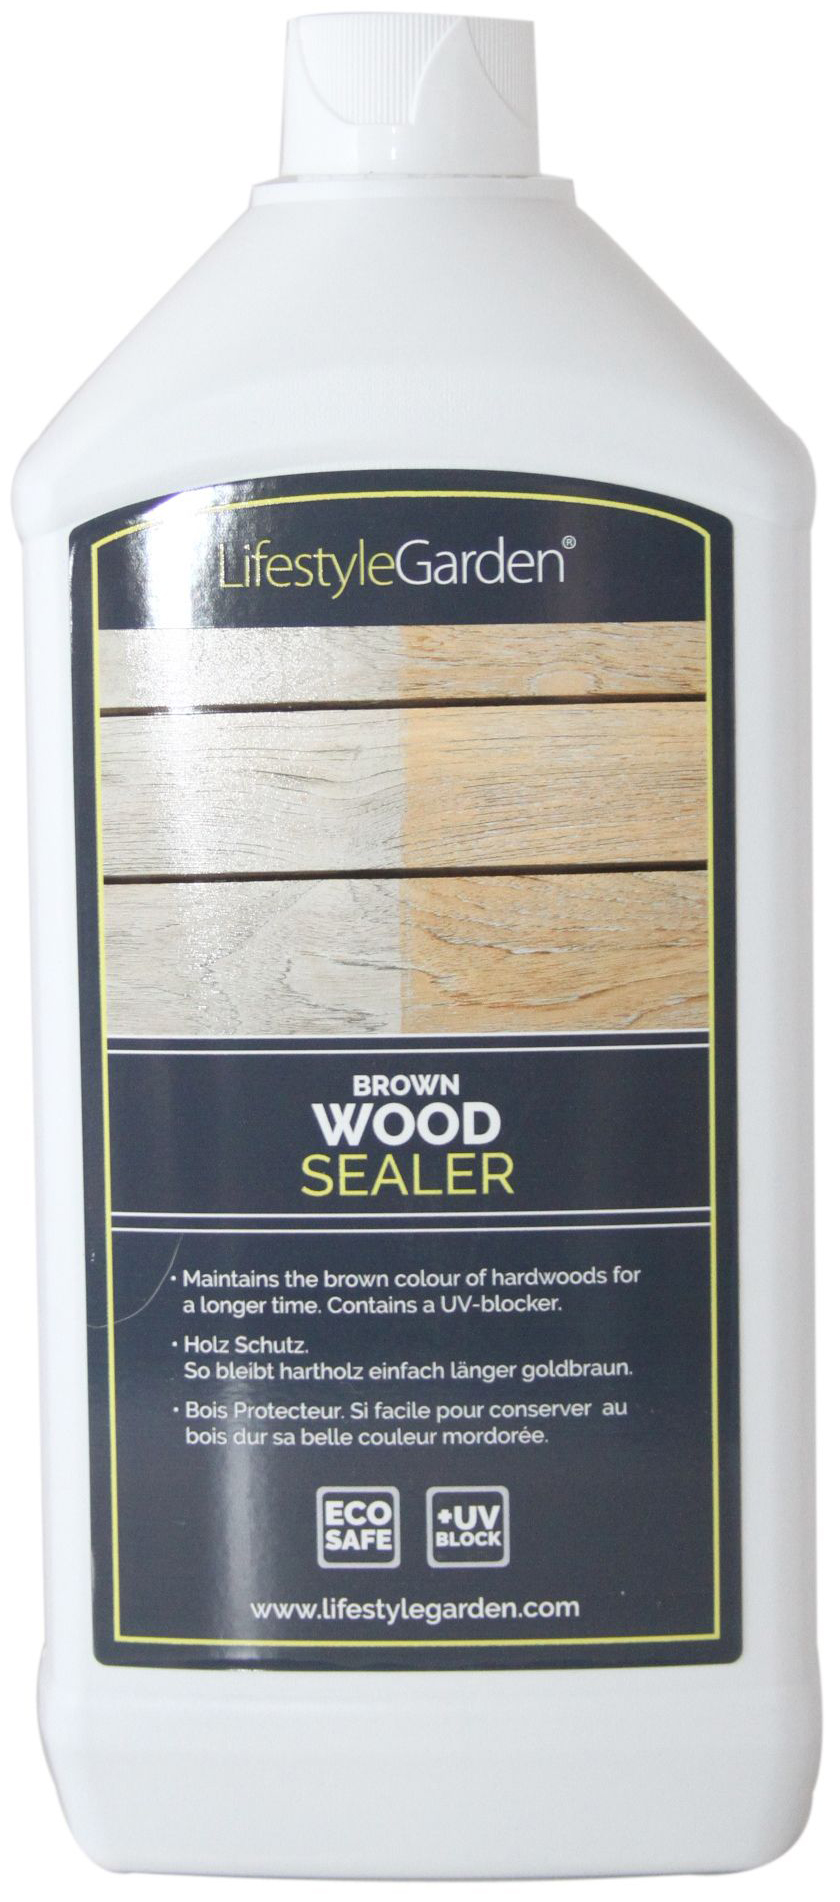 LifestyleGarden Brown Wood Sealer - 1 Litre